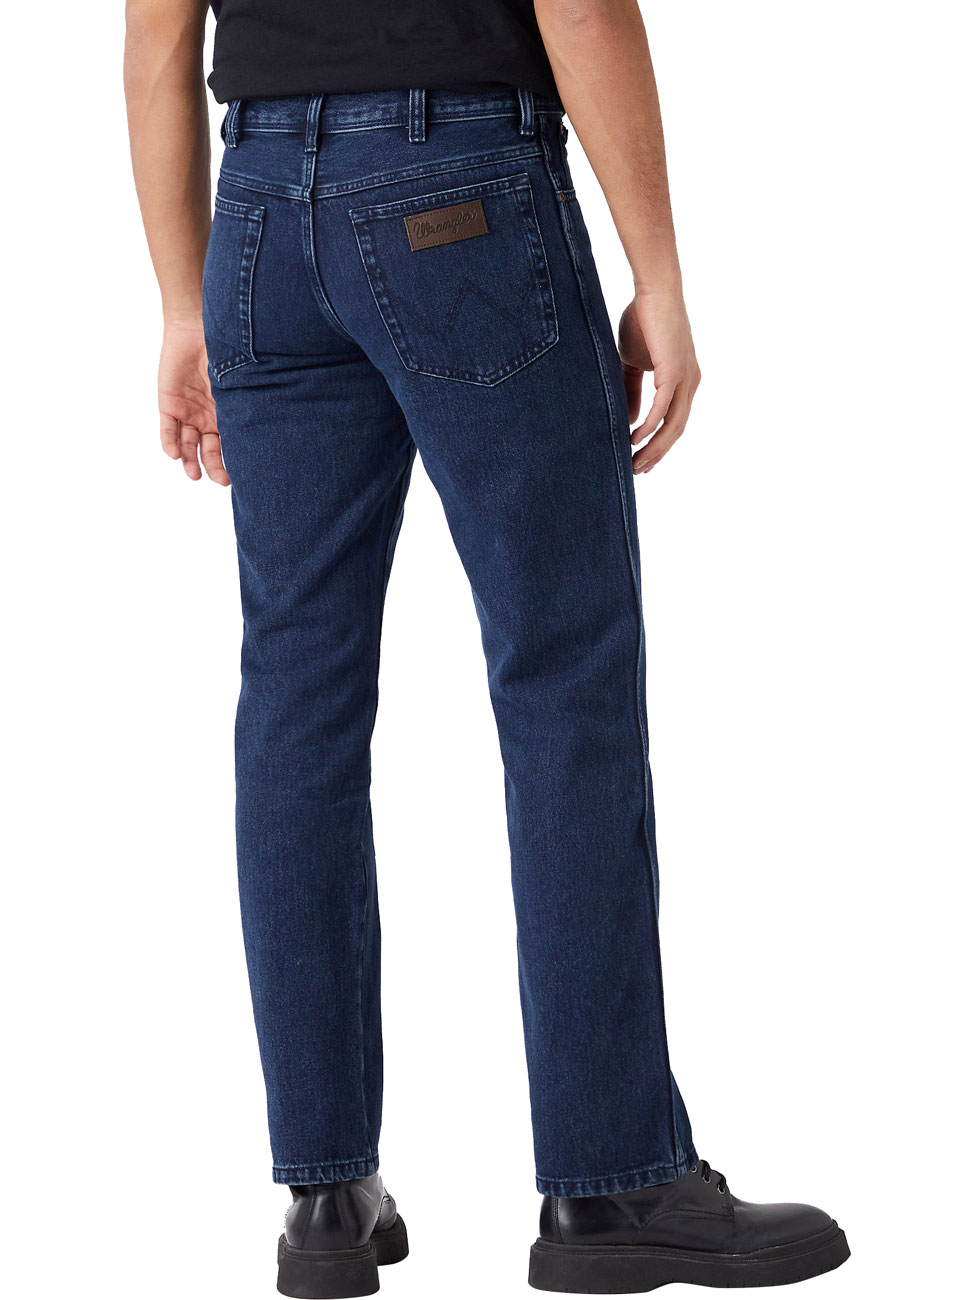 Wrangler Herren Jeans Texas - Regular Fit - Blau - Coalblue Stone günstig online kaufen